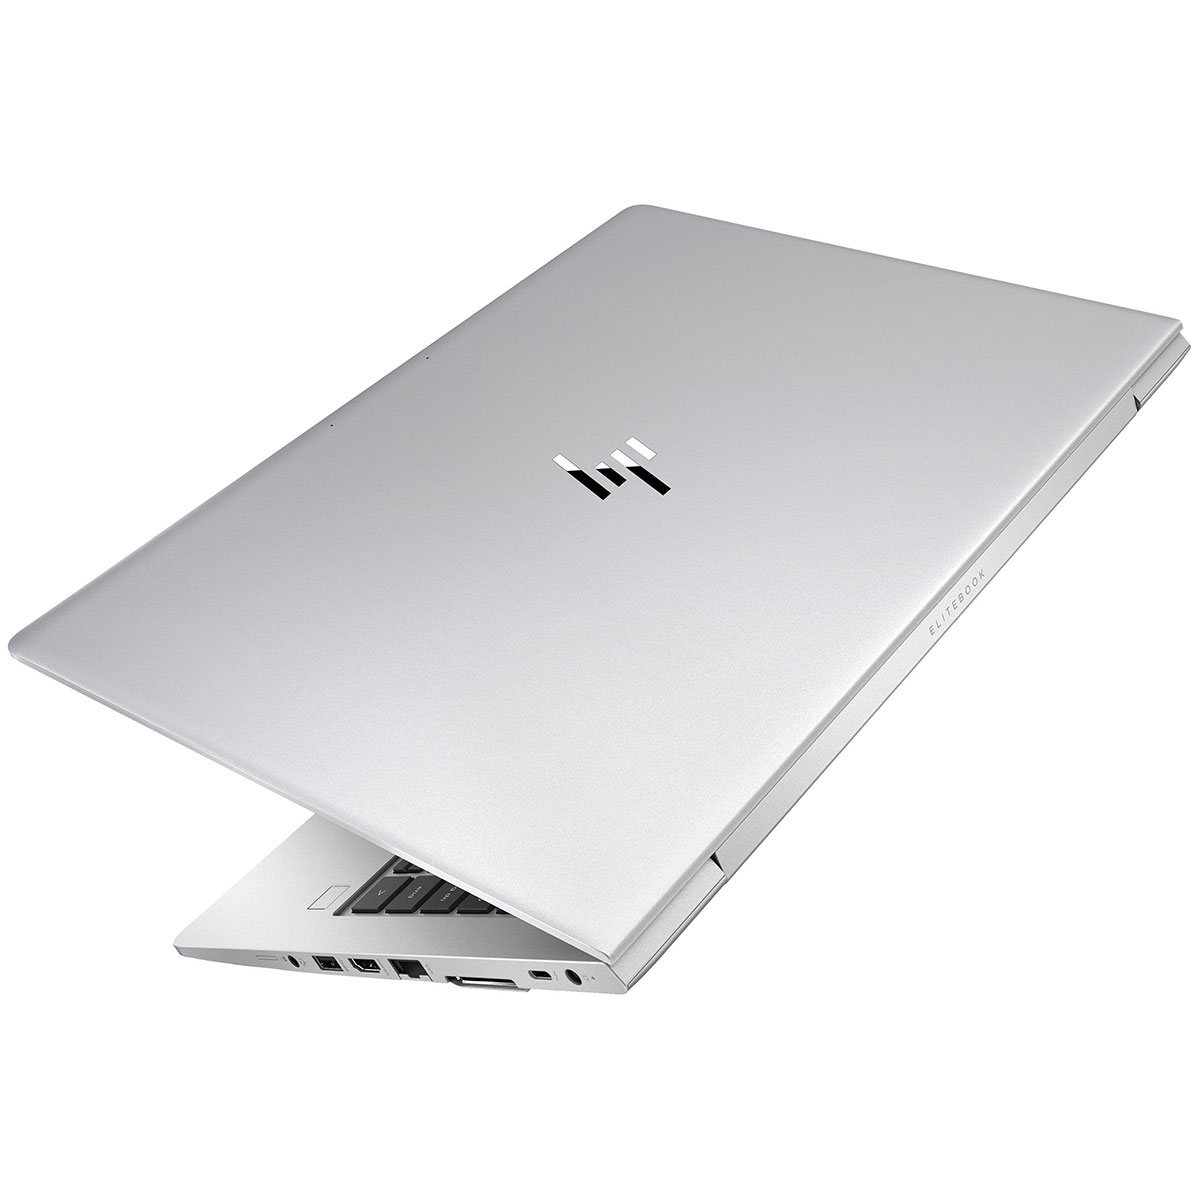 HP Elitebook 840 G5 - 14 FHD - i5-8350U Quad Core - 8 Go RAM - 256